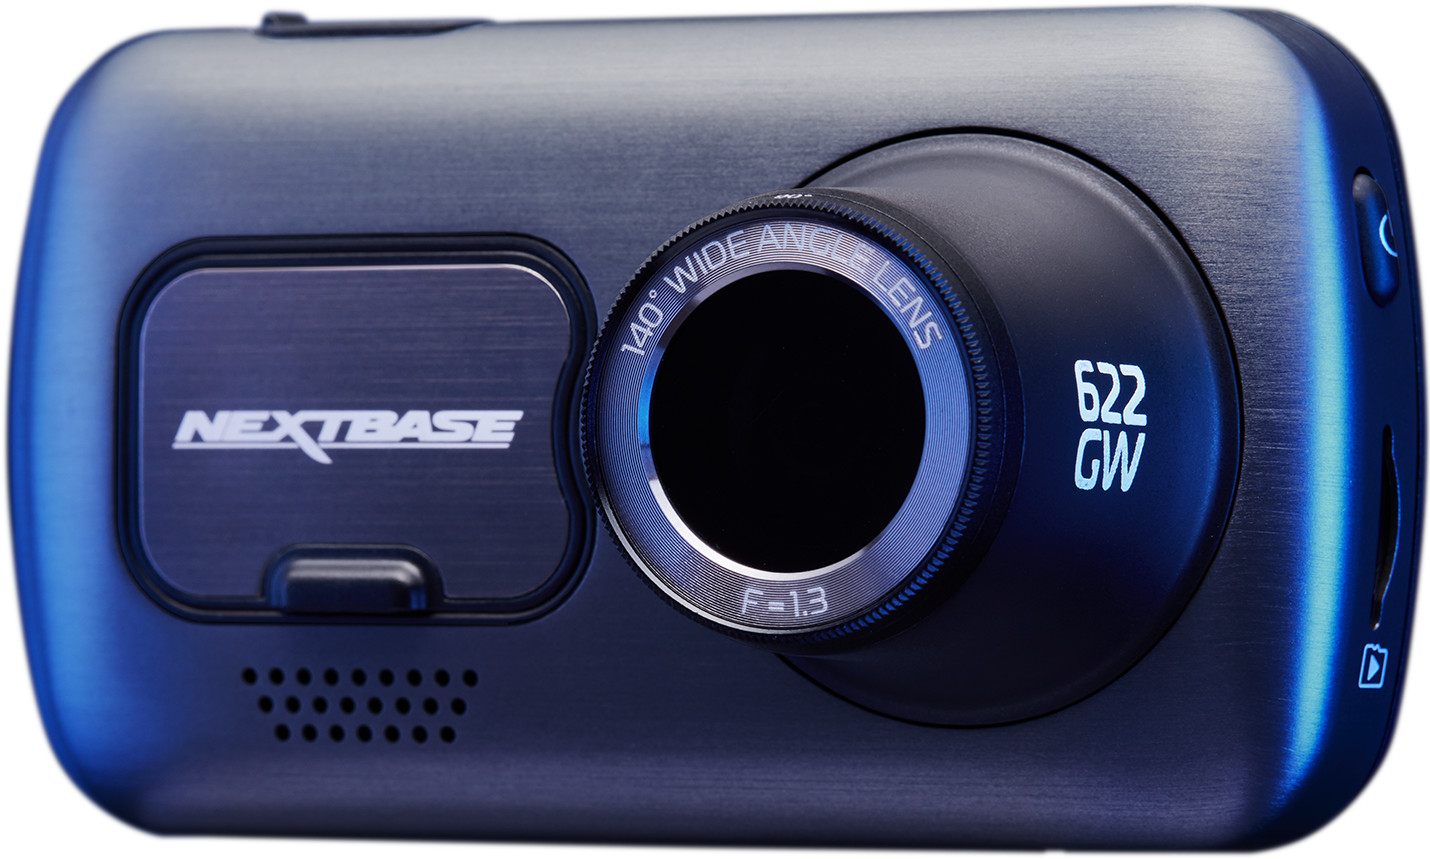 Camera embarquée sans fil Bluetooth Next Base 622 GW Noir - Fnac